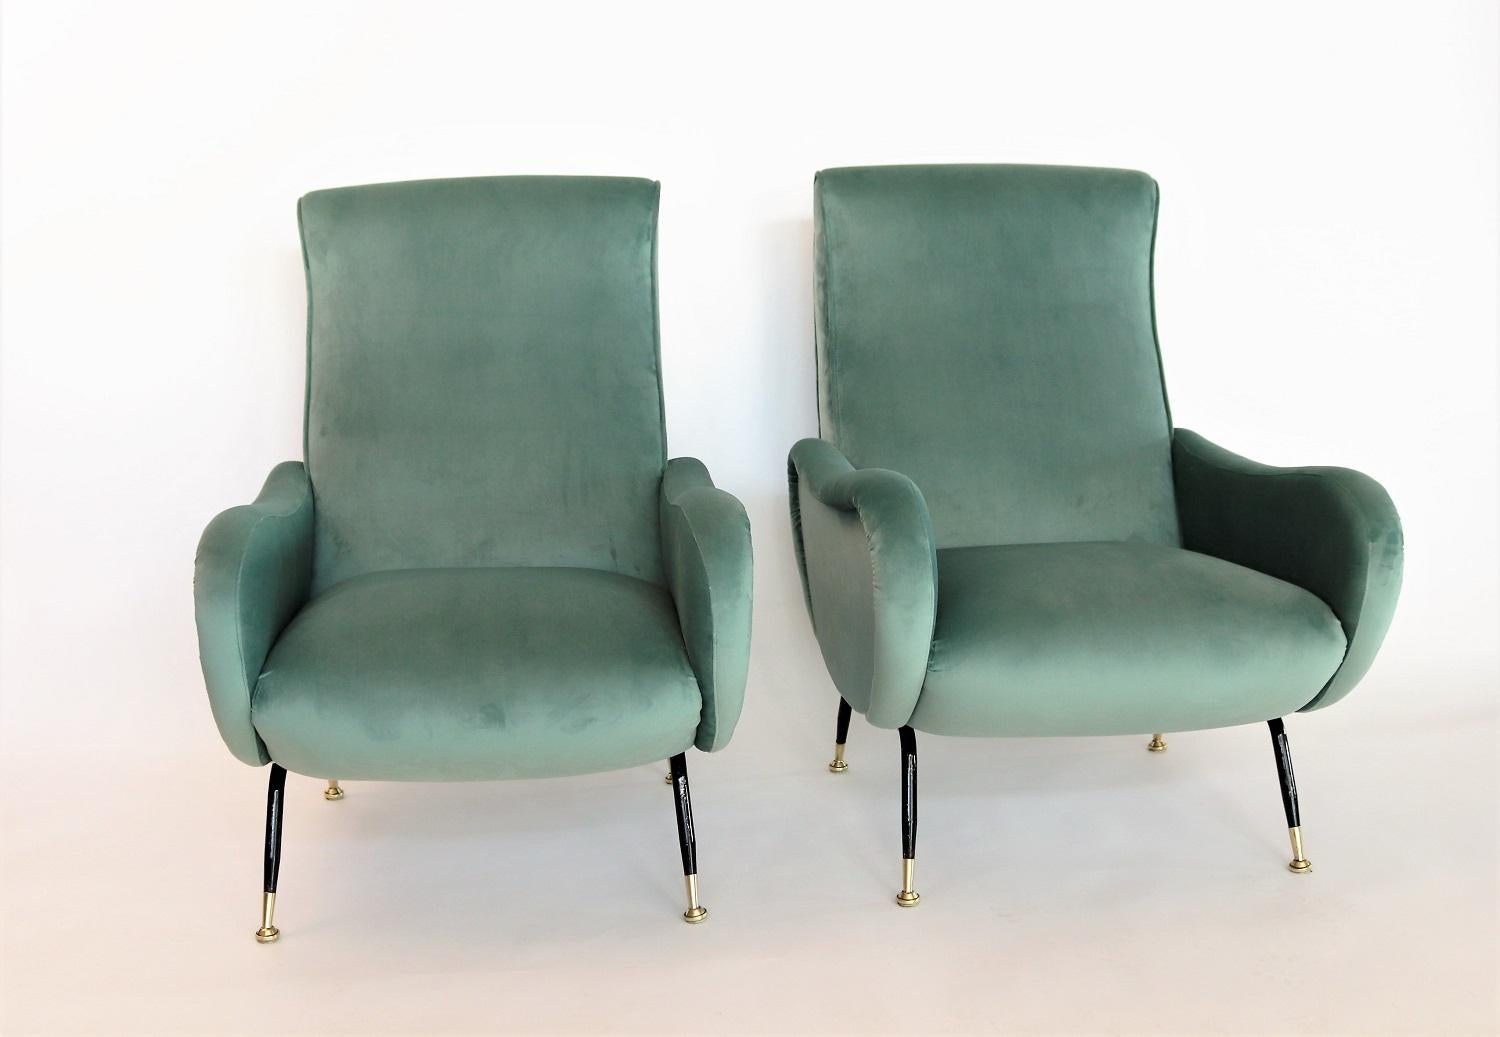 Mid-20th Century Italian Midcentury Armchairs in Mint Green Velvet and Brass, 1950s